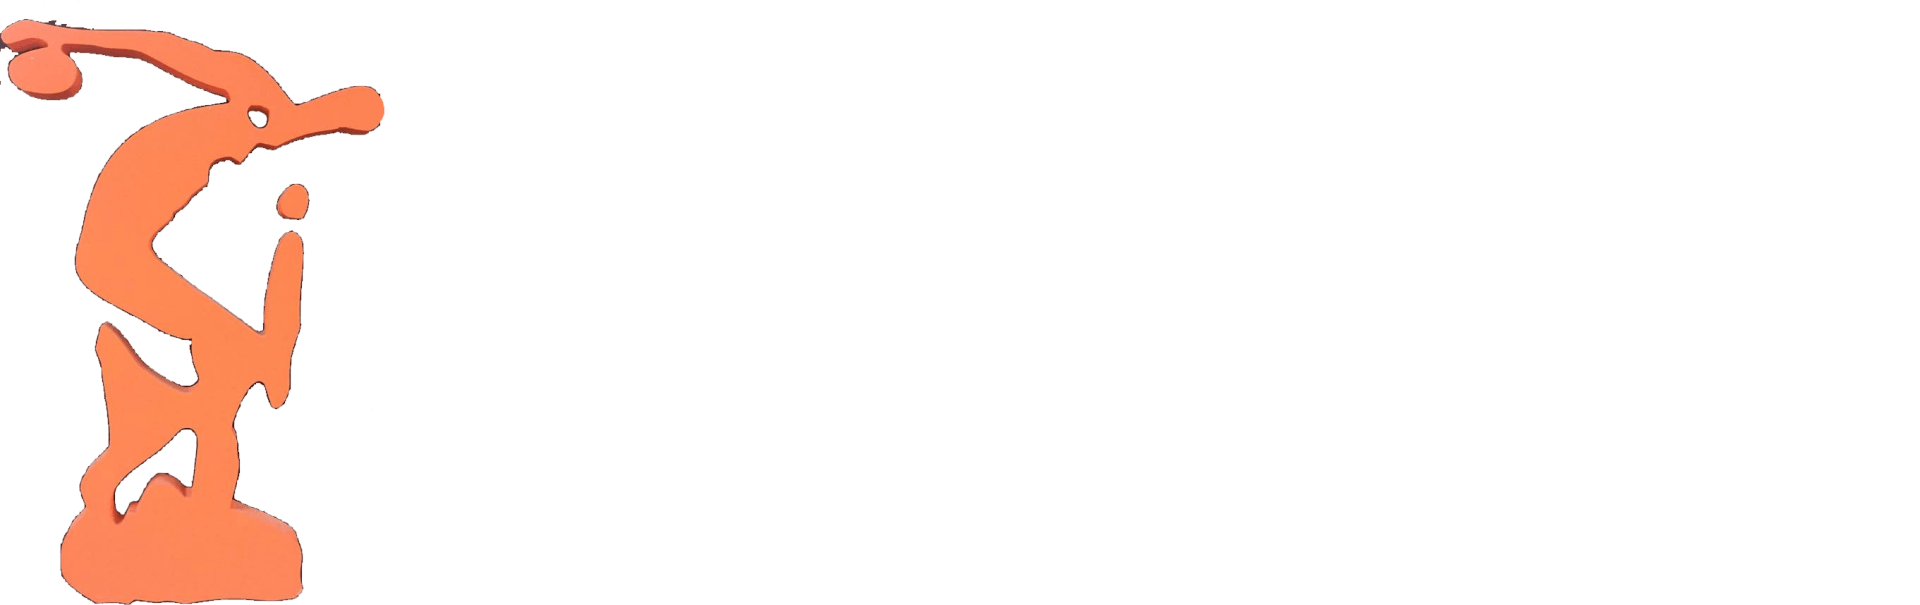 Frank Crossin Agency Inc - Logo